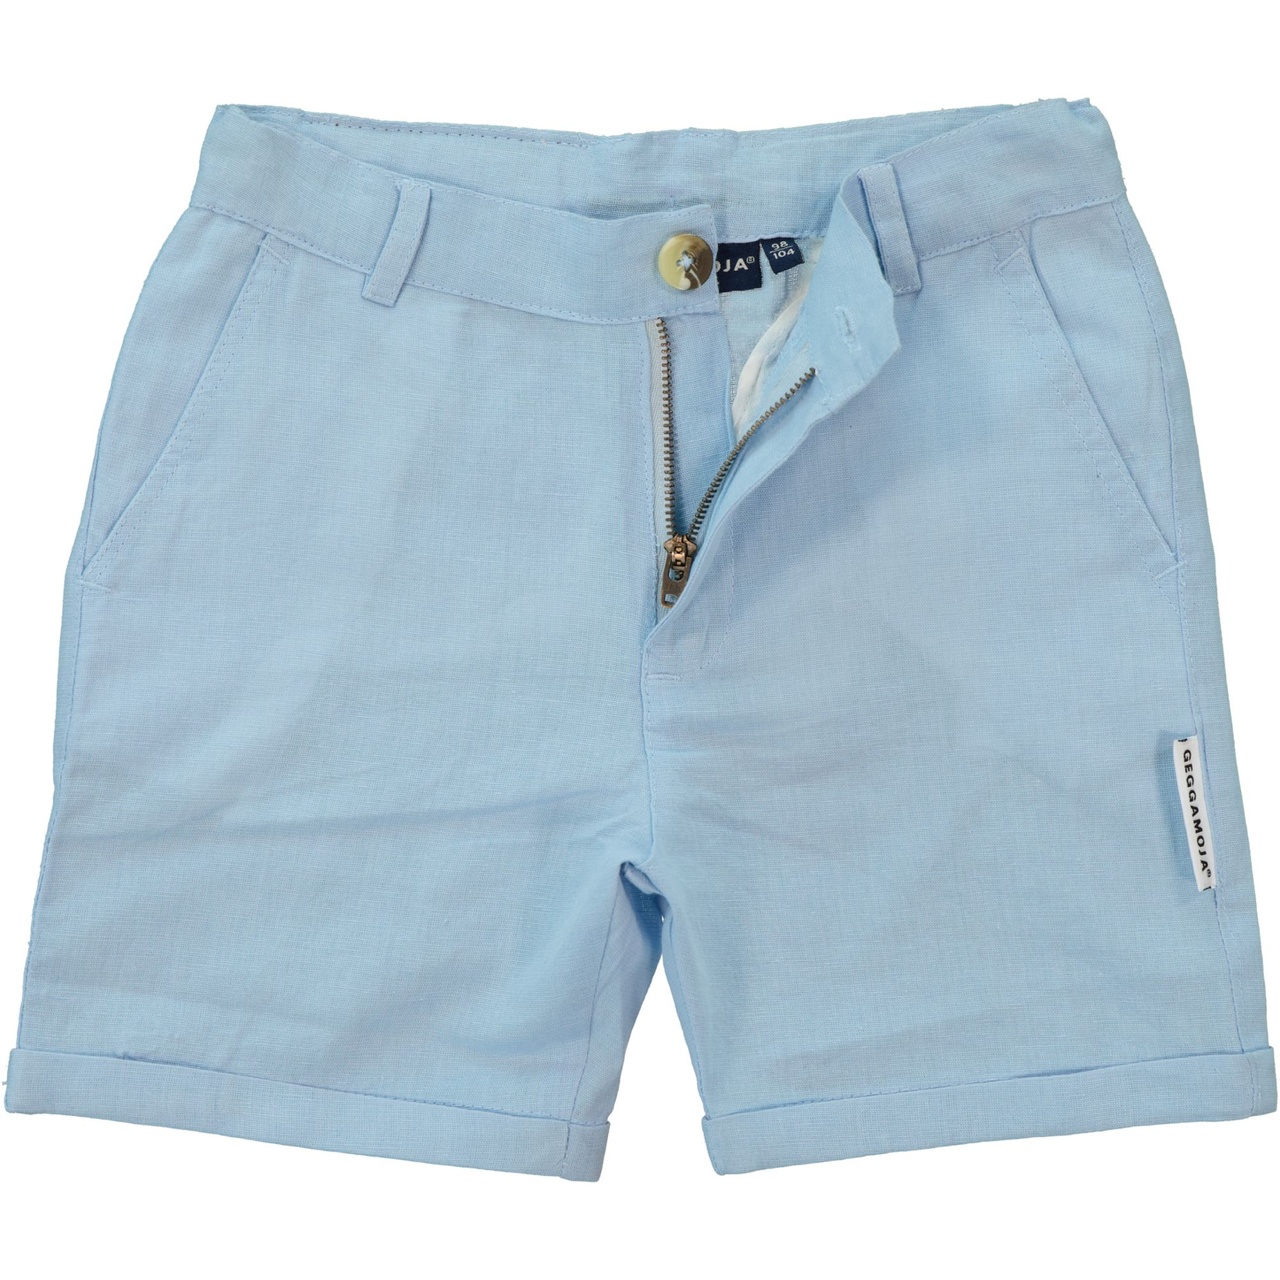 Linnen chino shorts Light blue 86/92